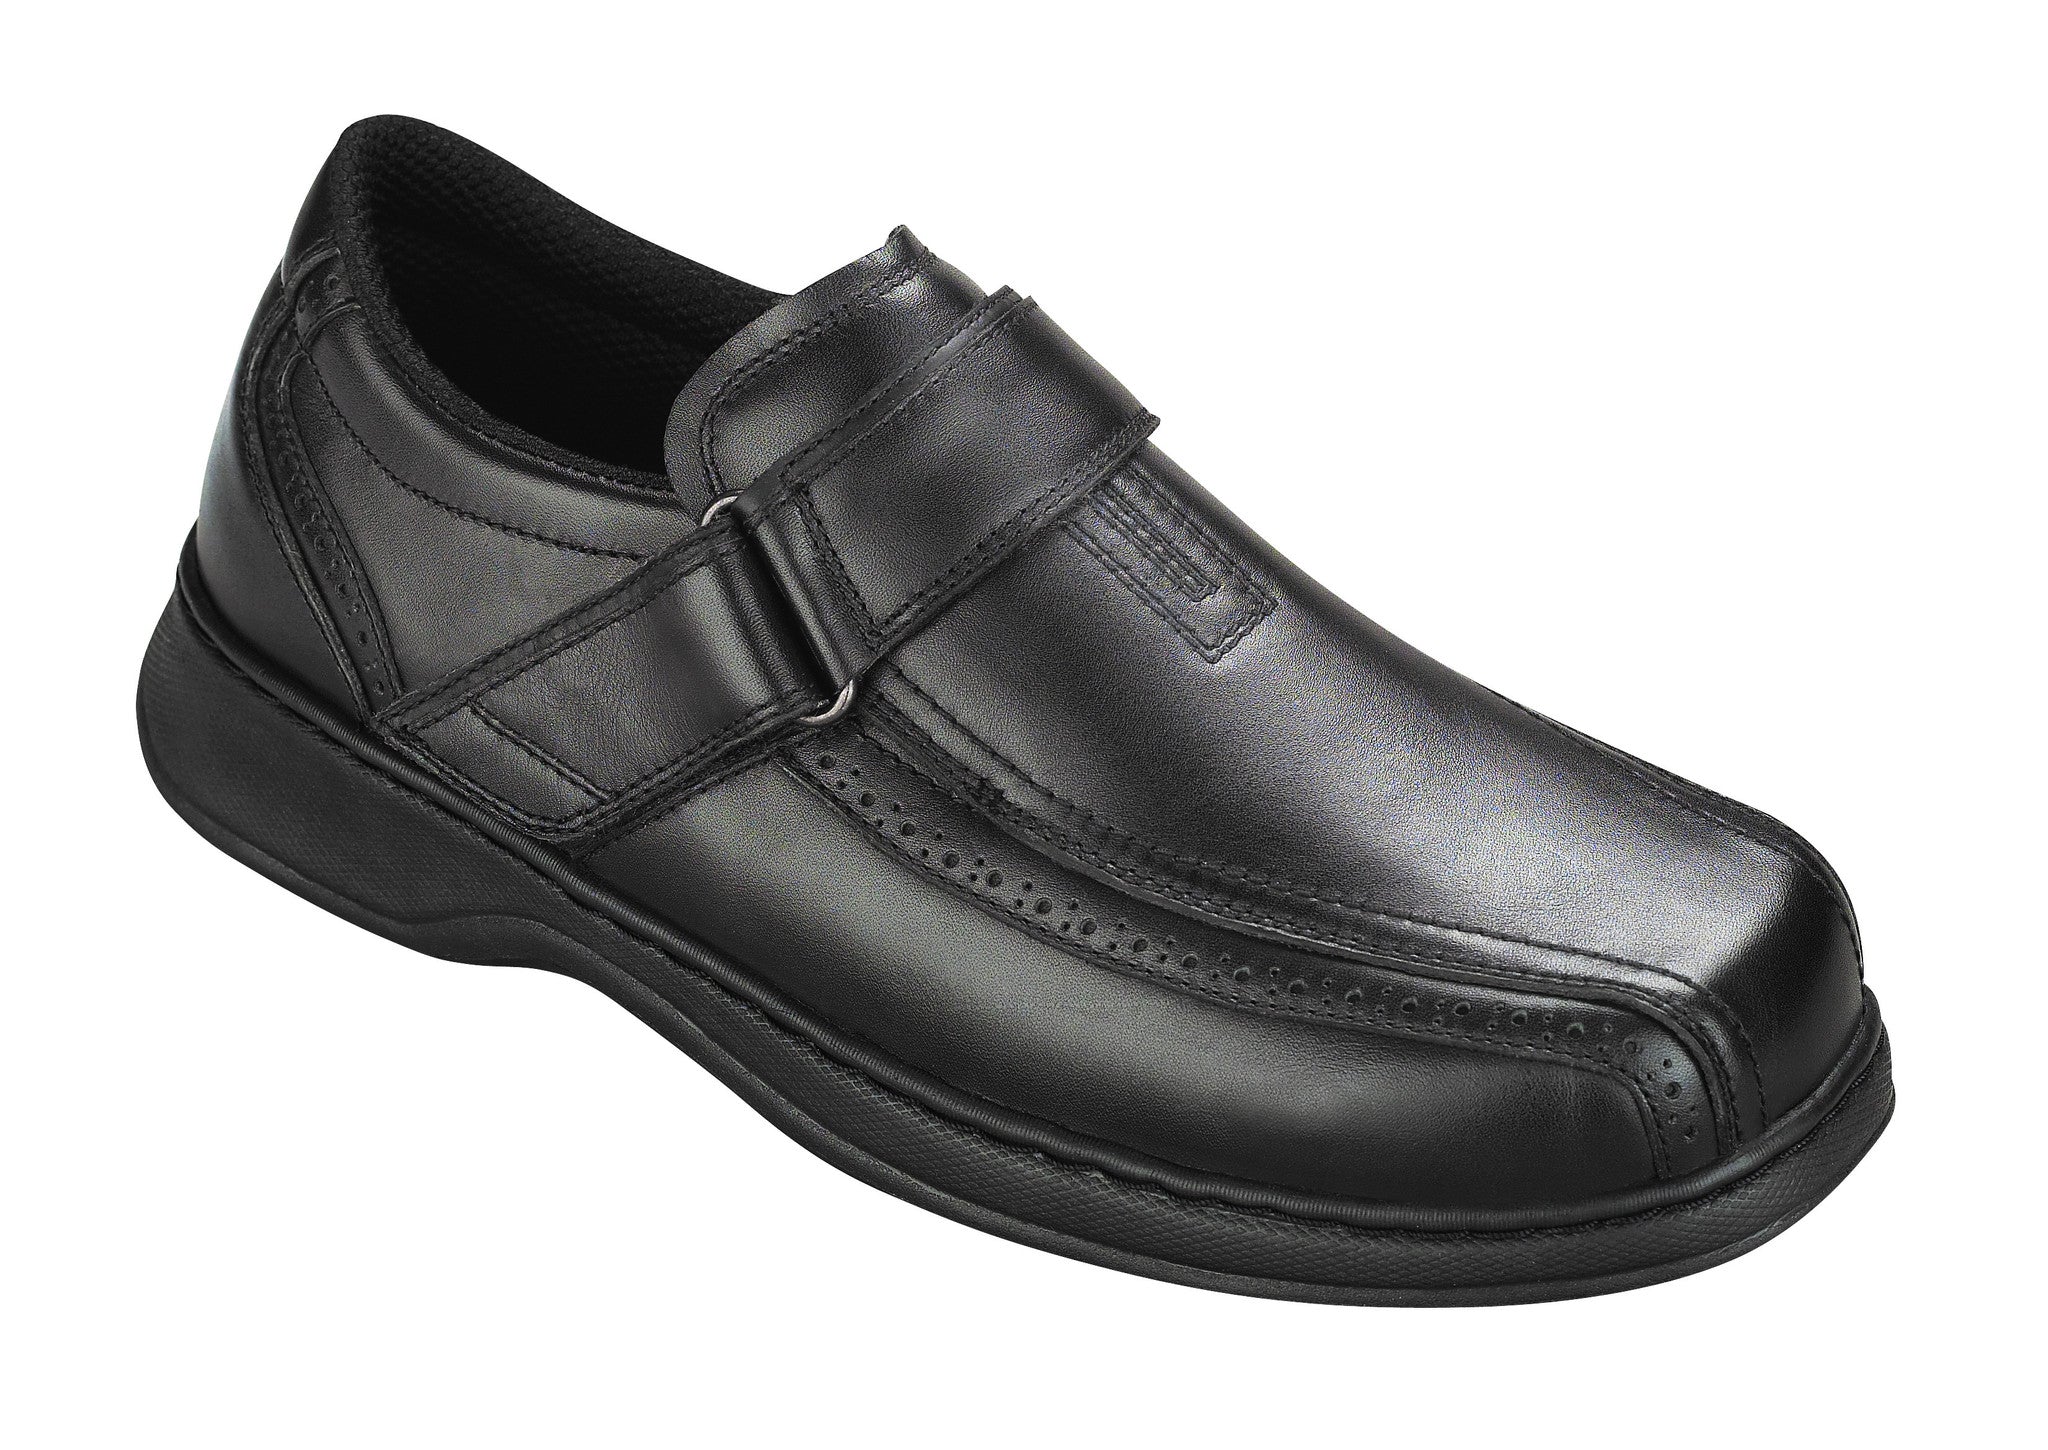 Orthofeet 585 Lincoln Center Men's Dress Shoe | Diabetic Shoes ...